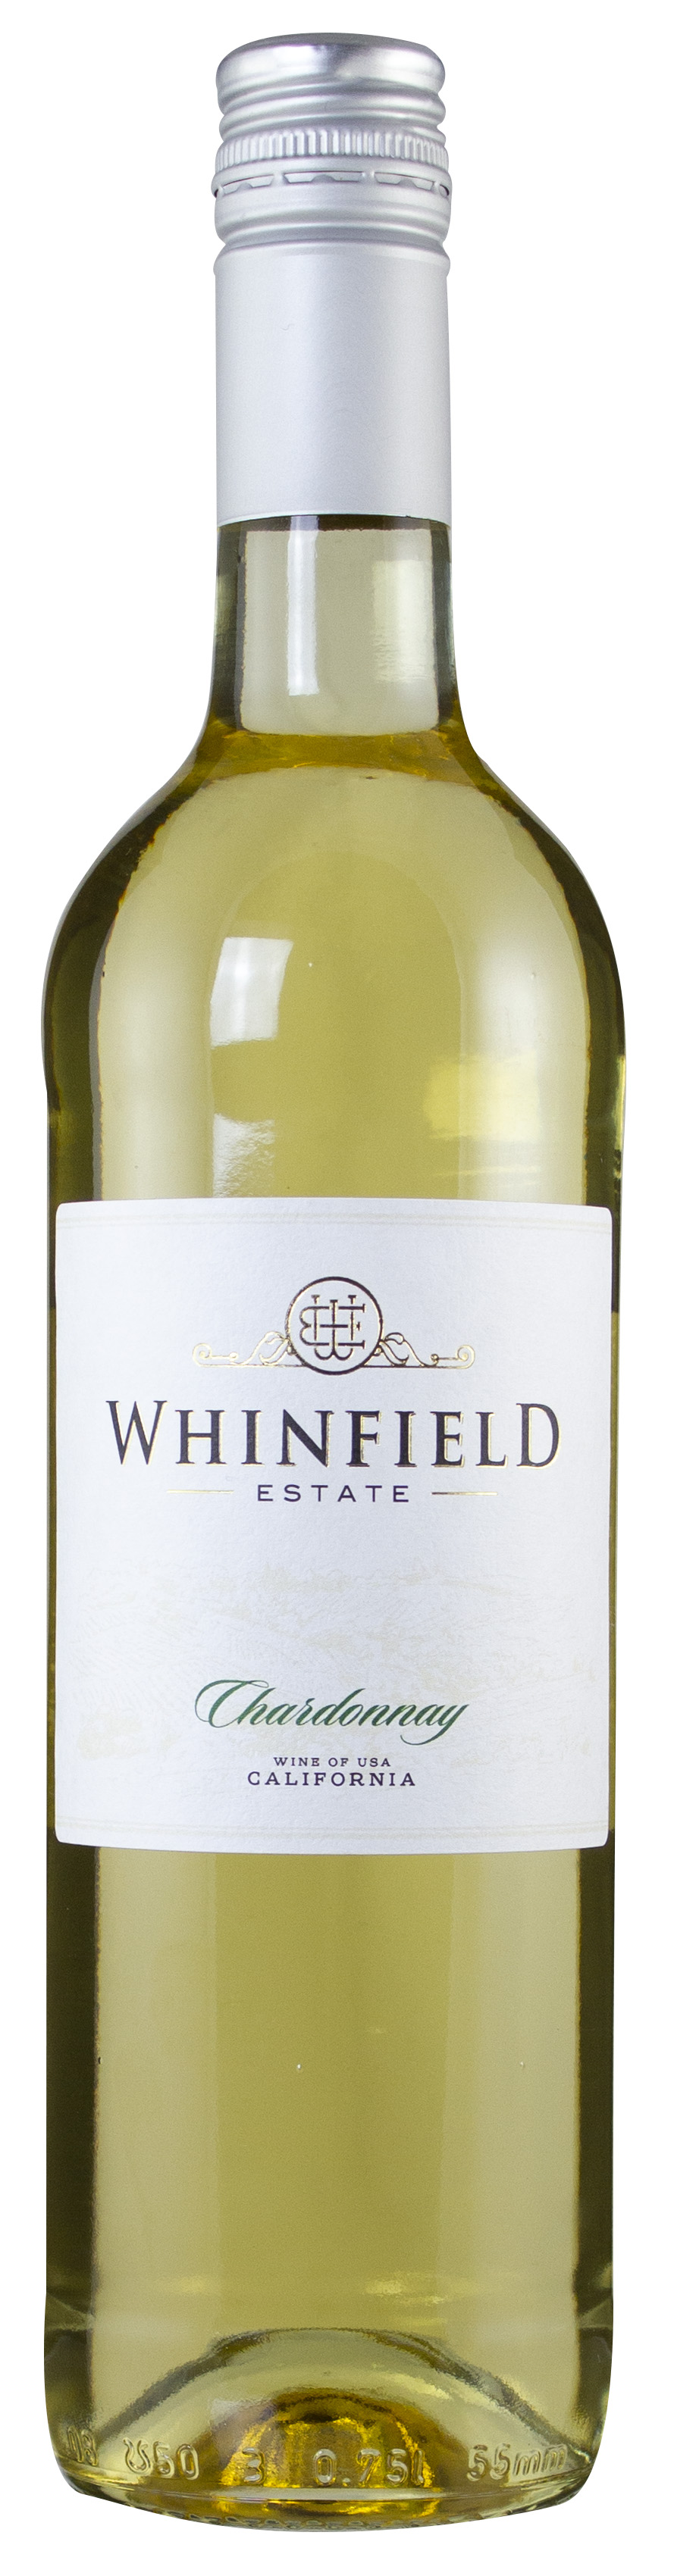 Whinfield Estate Chardonnay 